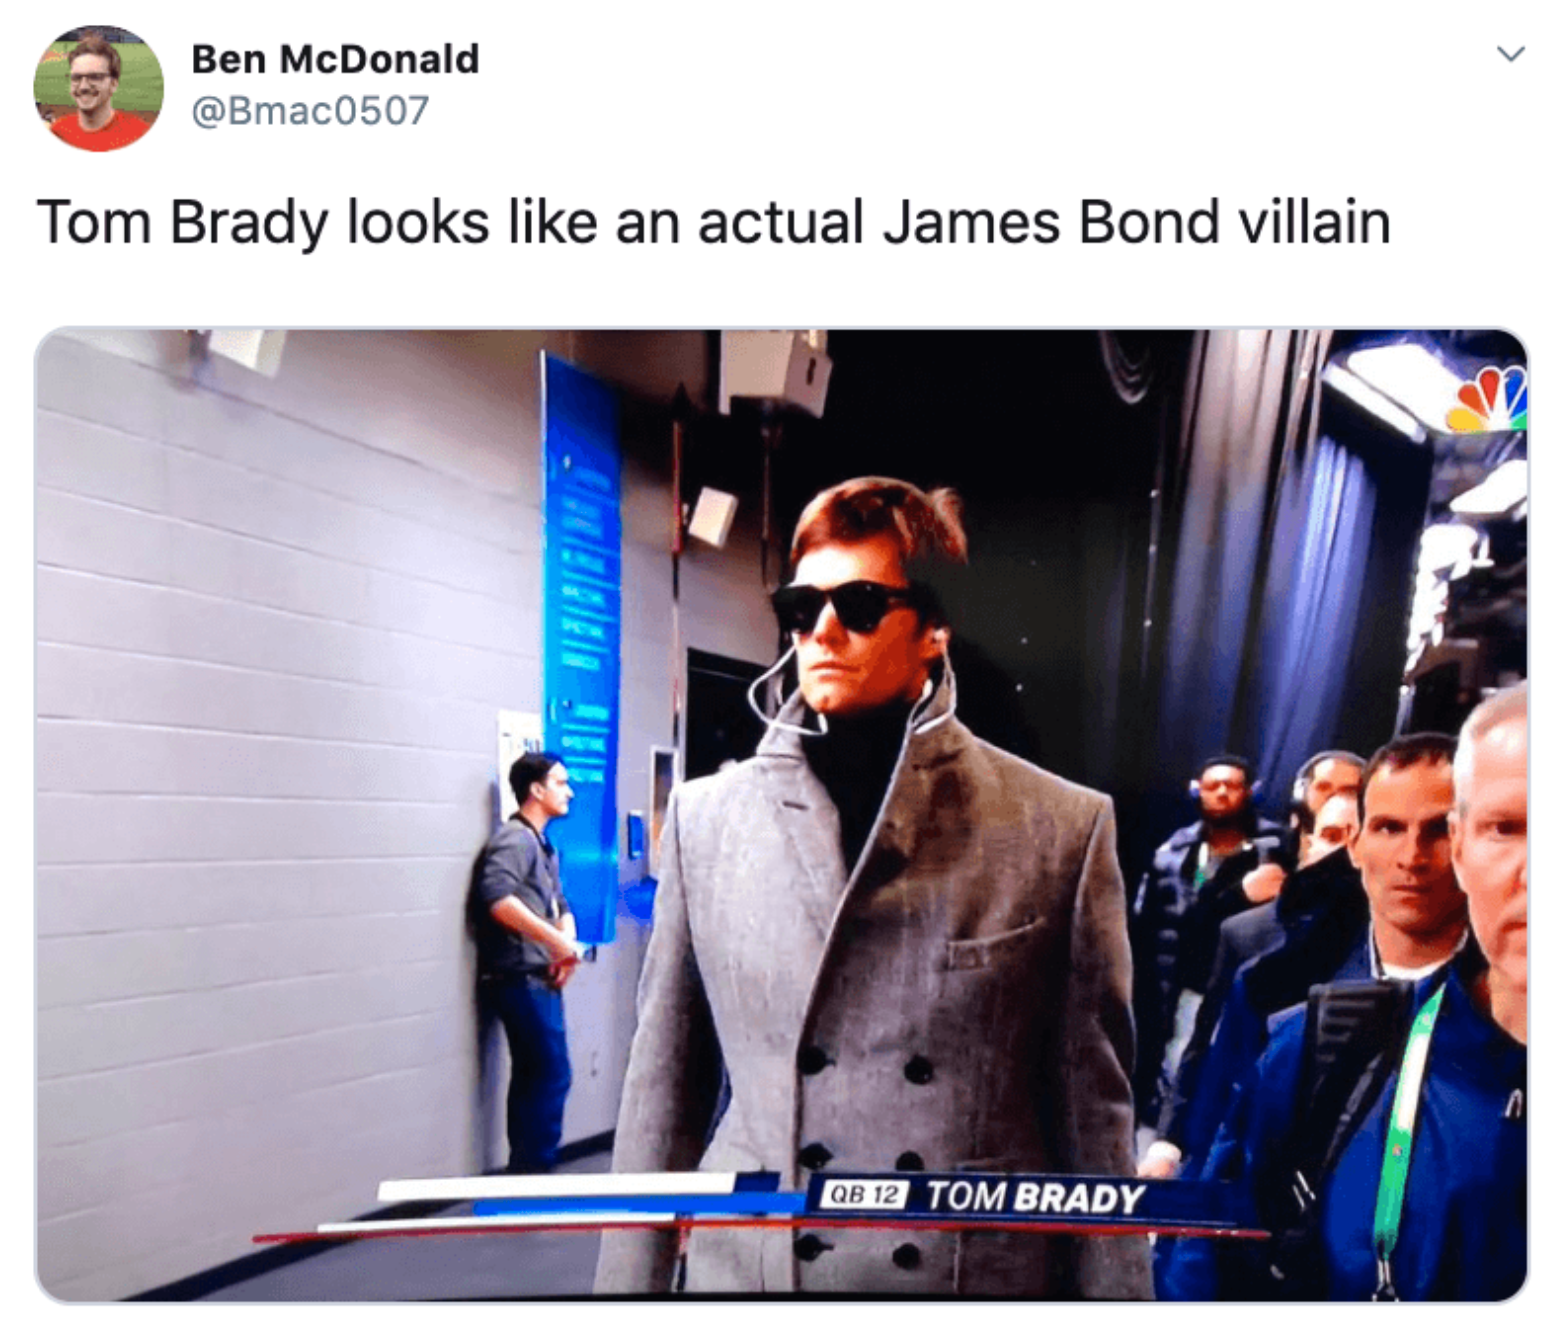 sunglasses - Ben McDonald Tom Brady looks an actual James Bond villain Qb 12 Tom Brady